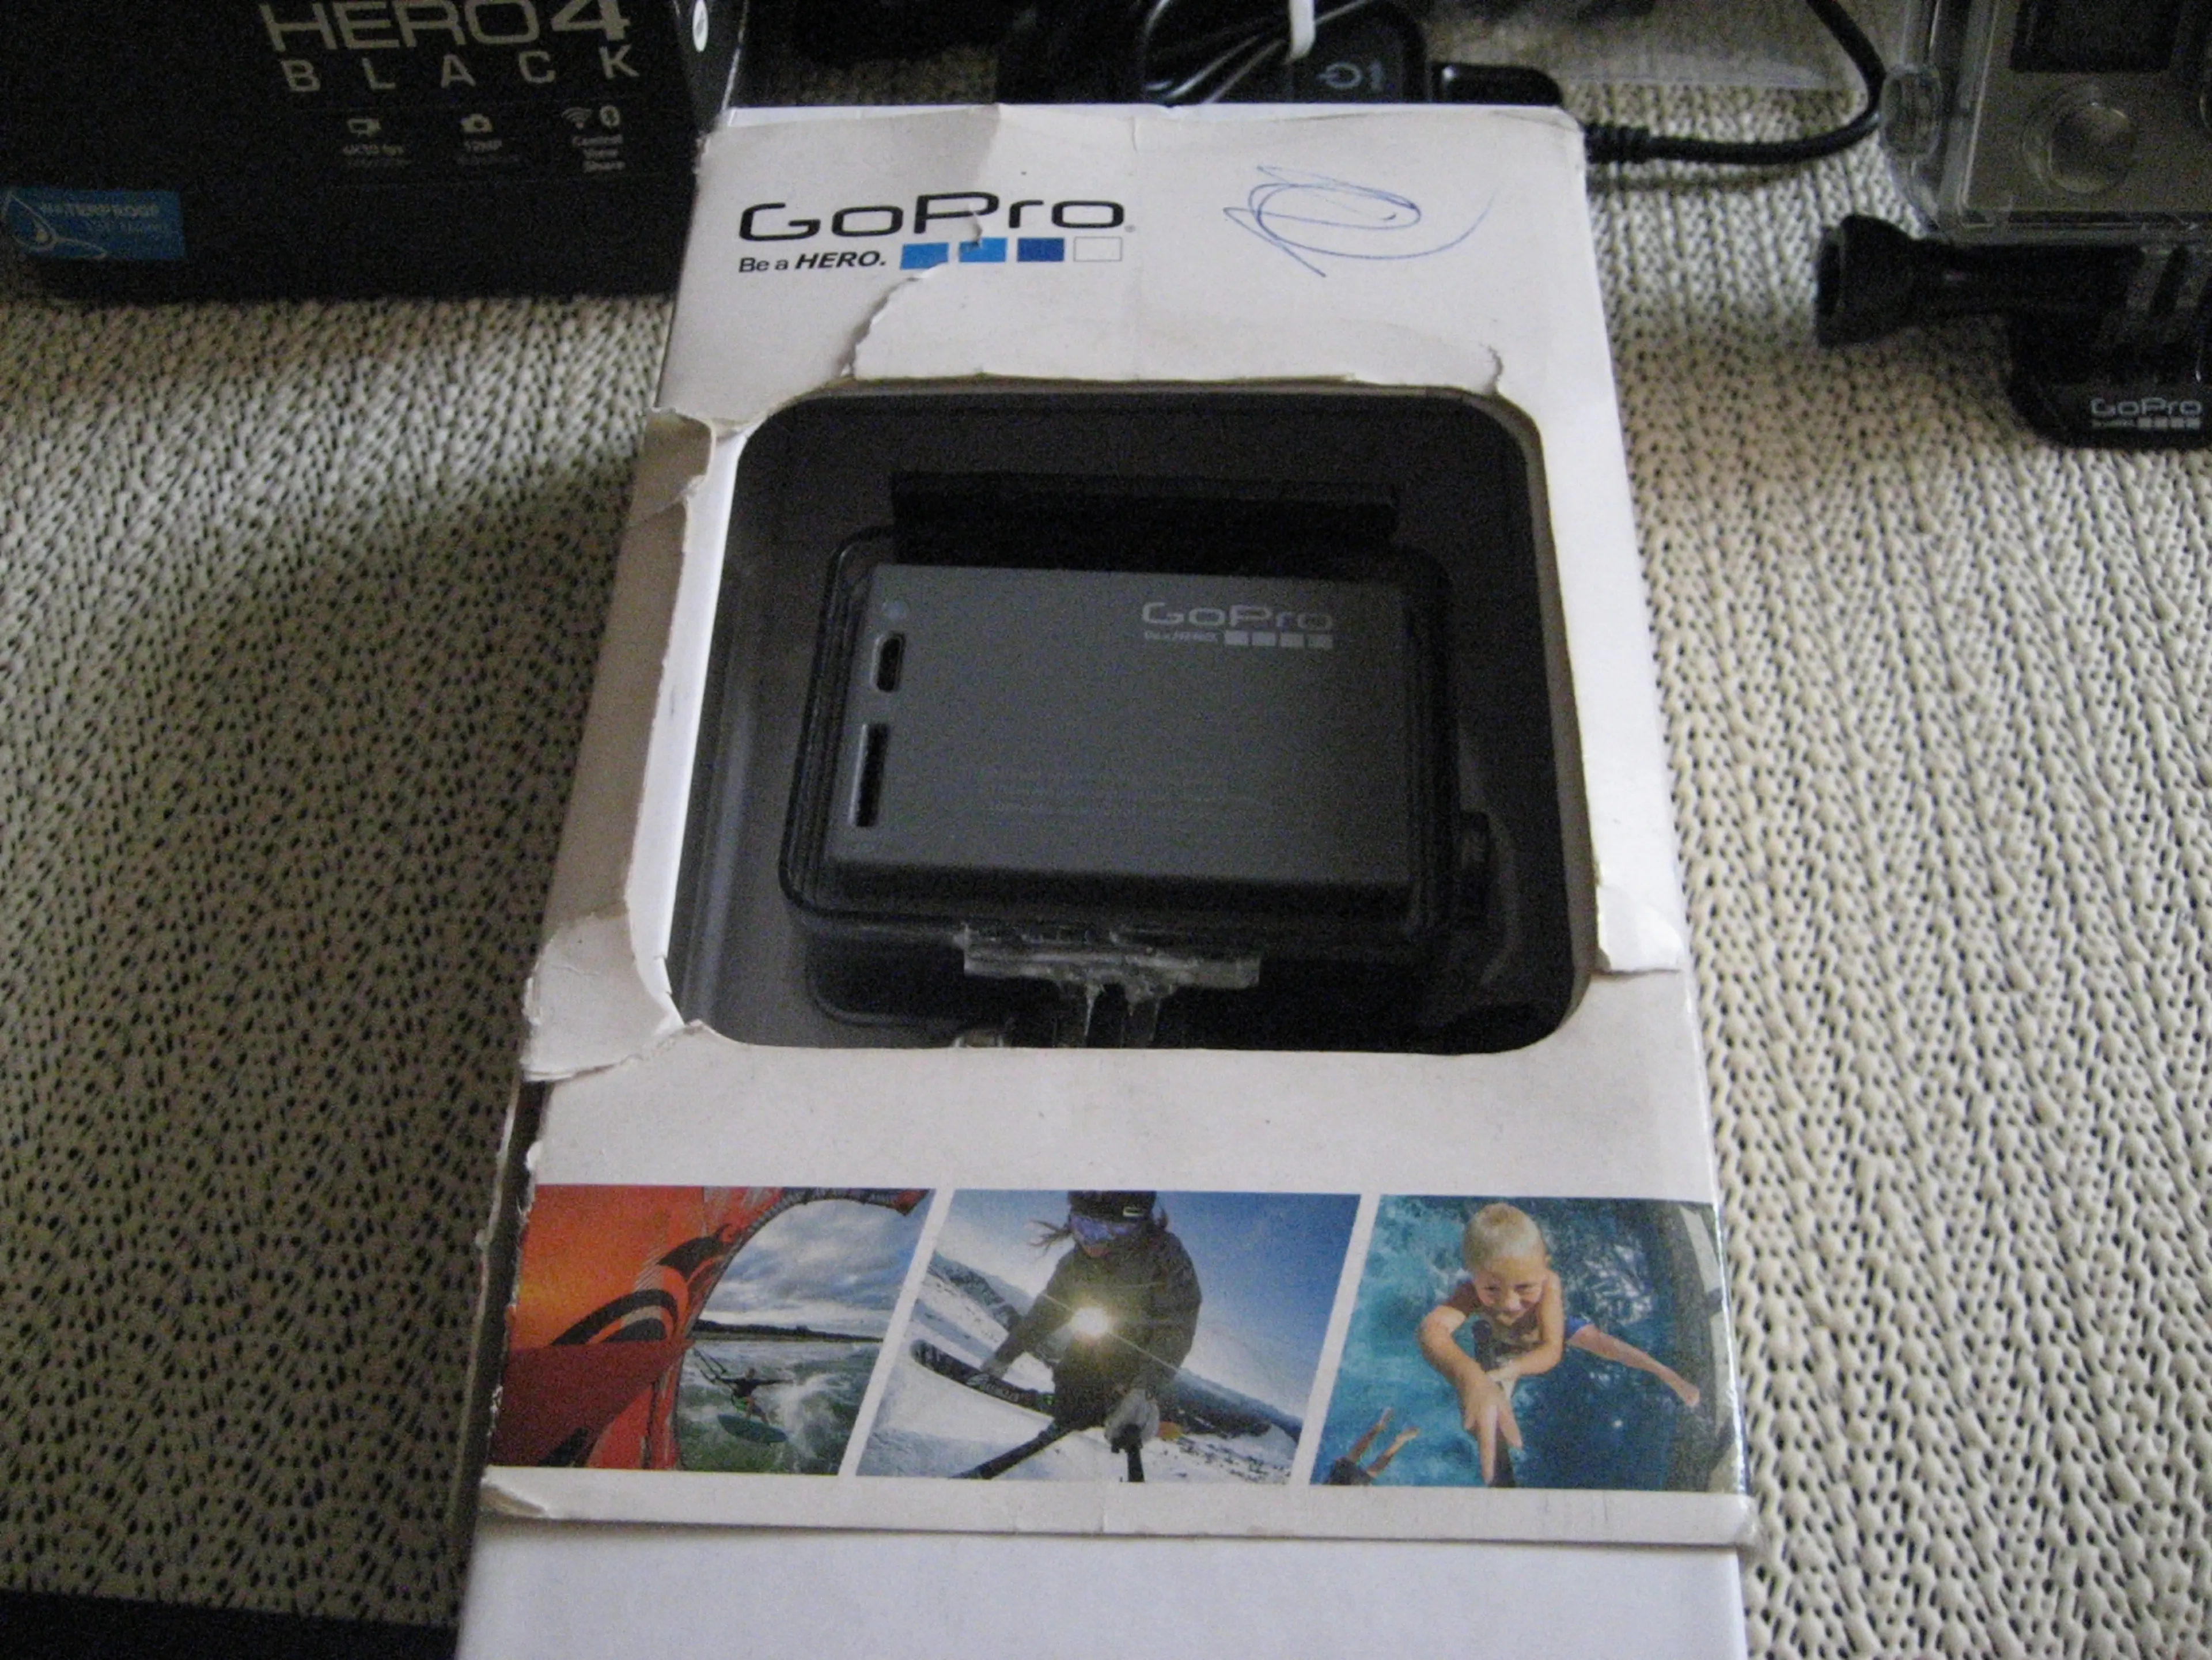 9. Camera actiune GoPro Hero+ ( model 2015) Full HD, Bluetooth + WiFi